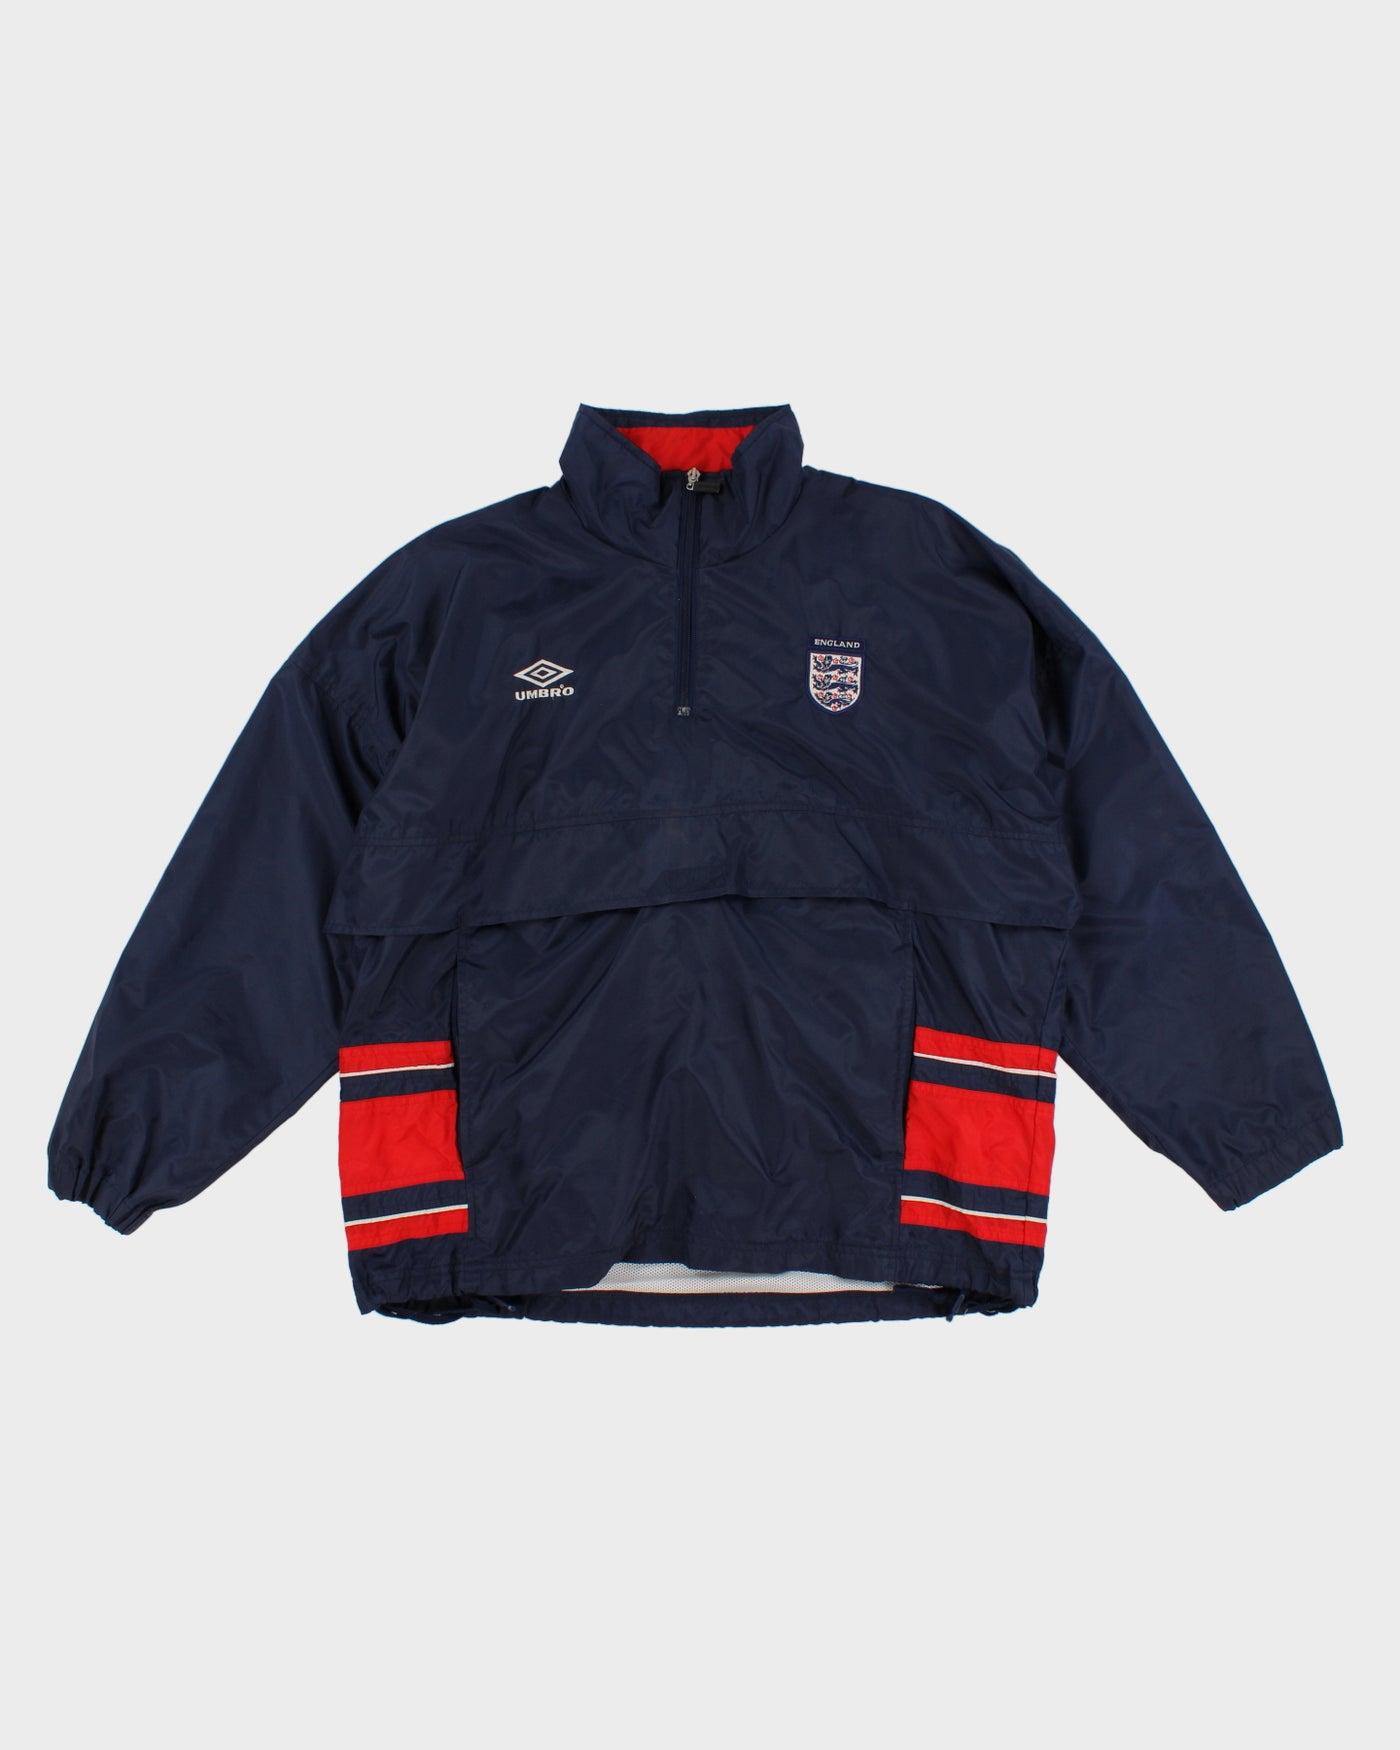 Vintage 90s Umbro x England Quarter Zip Oversize Shell Jacket - M